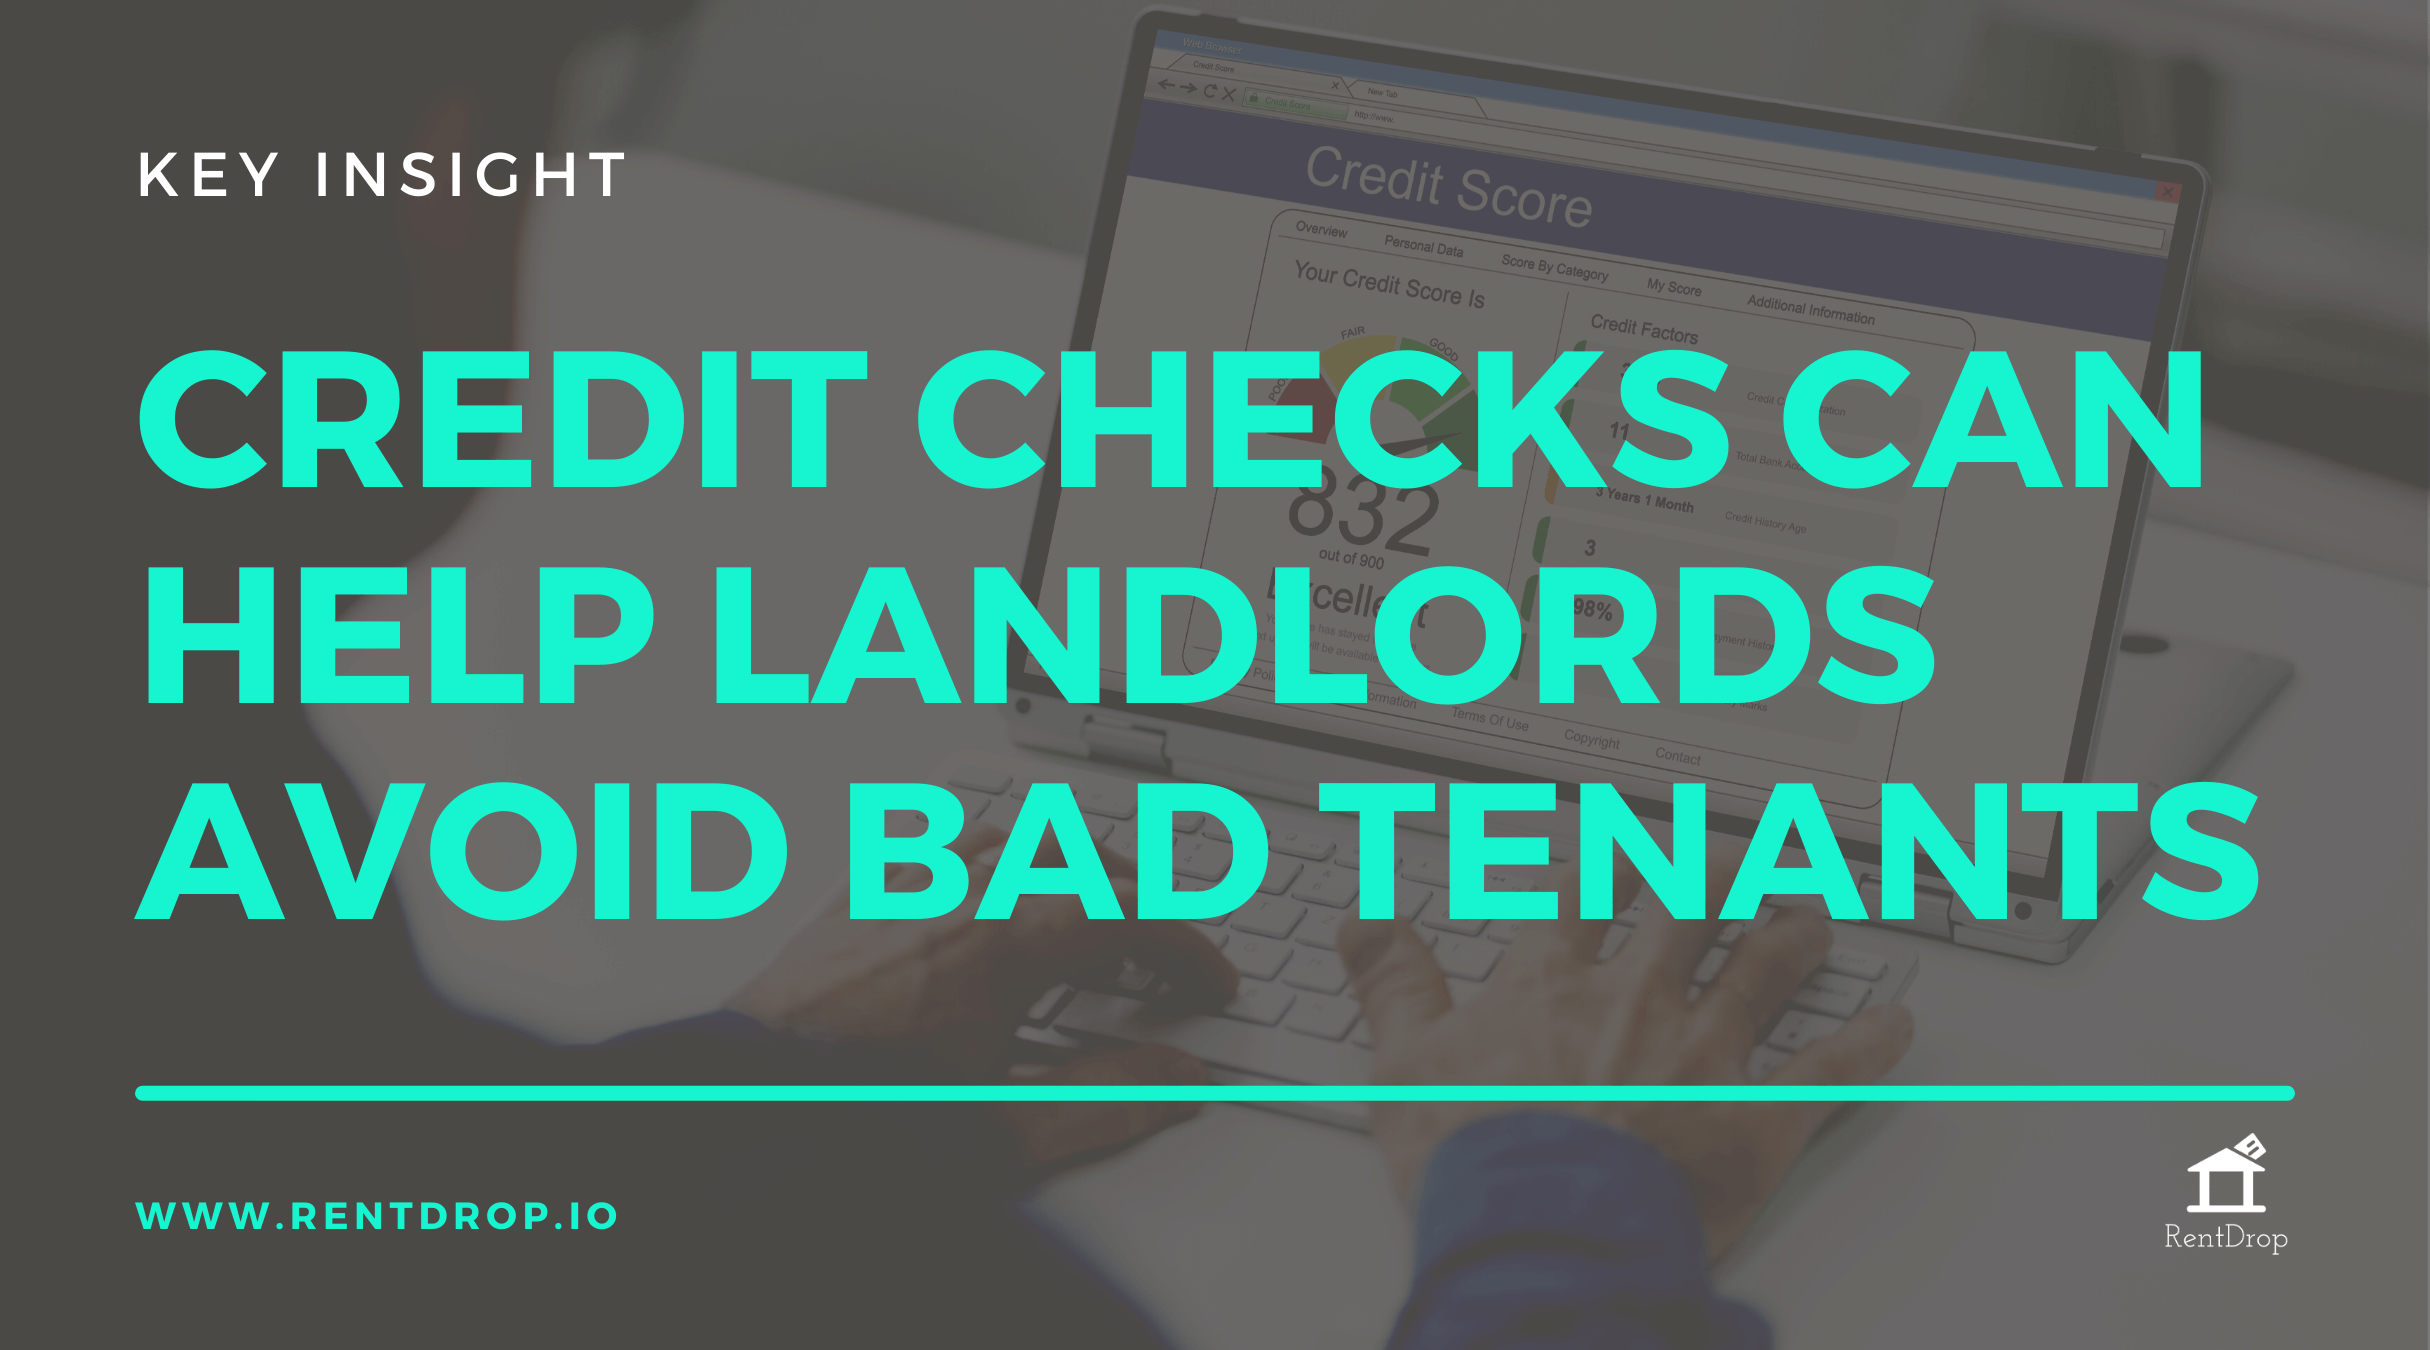 rentdrop tenant credit checks insight